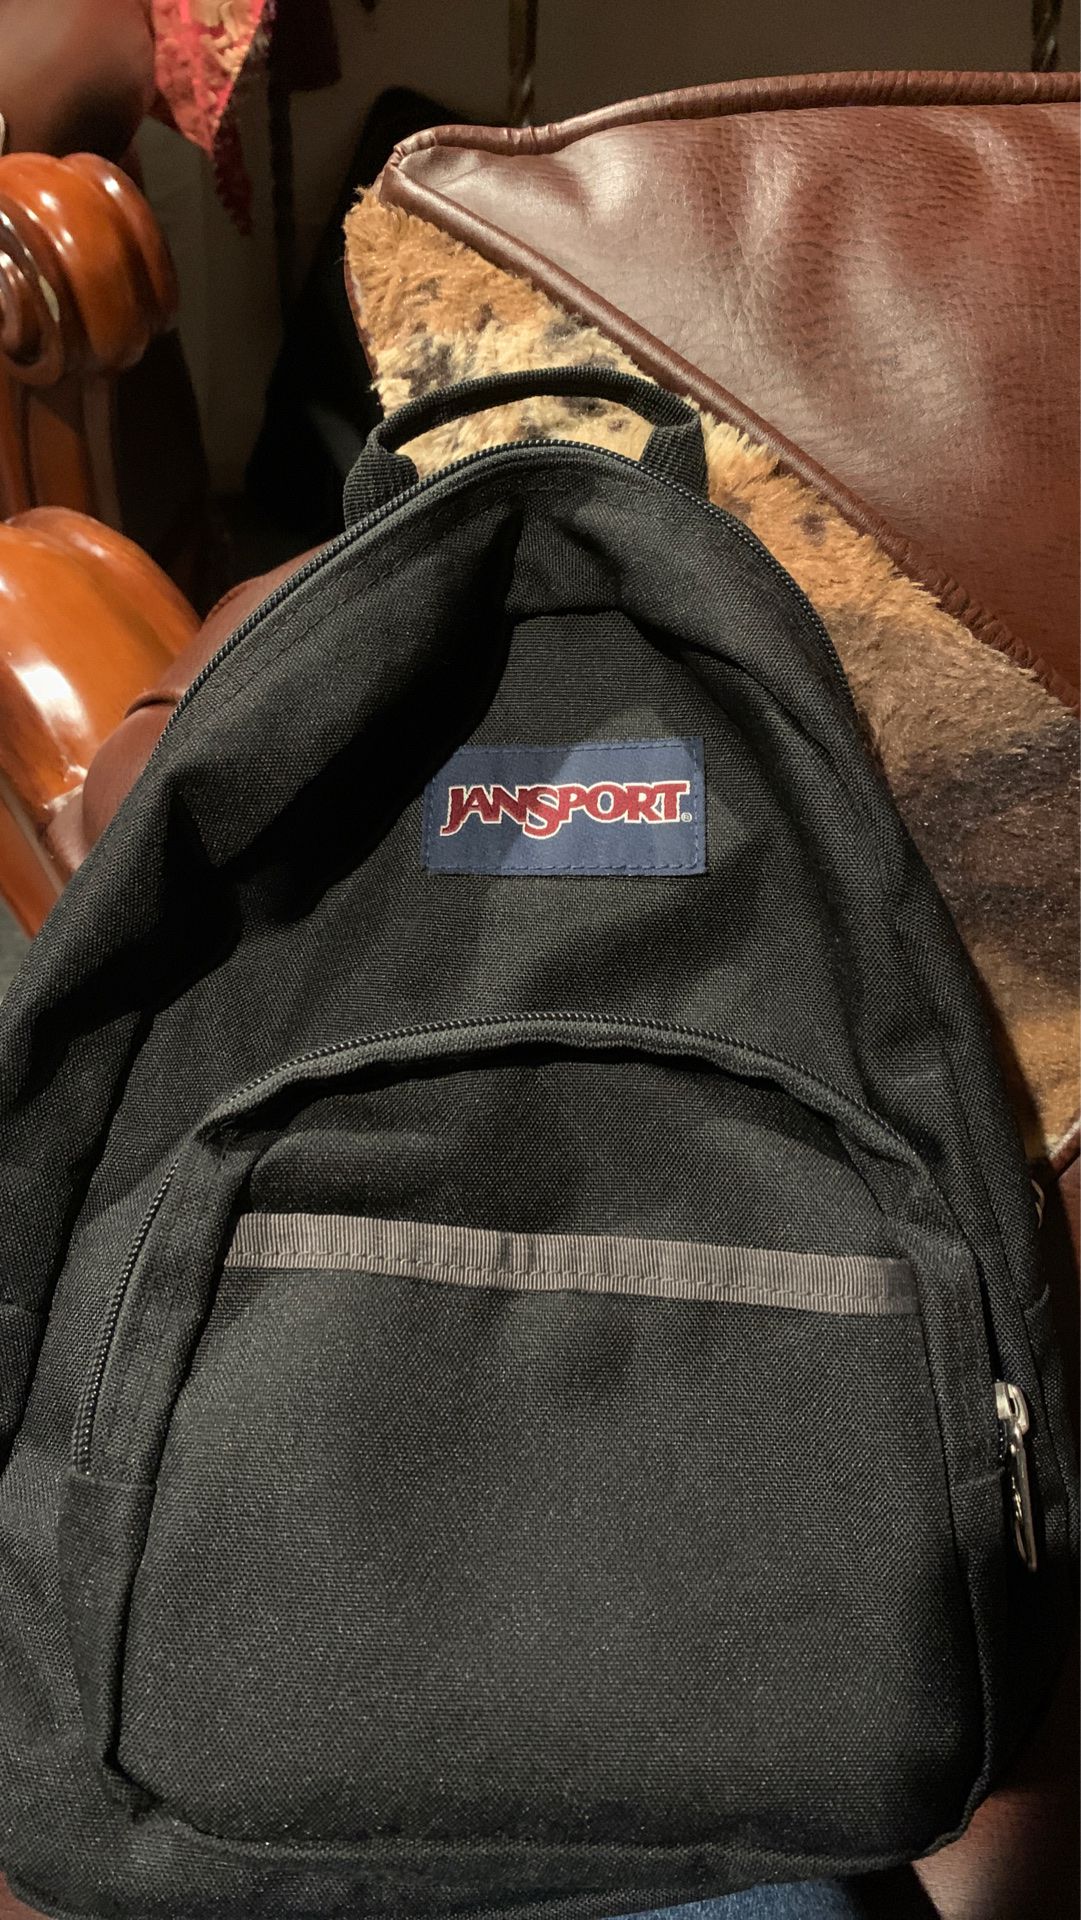 Mini jansport backpack